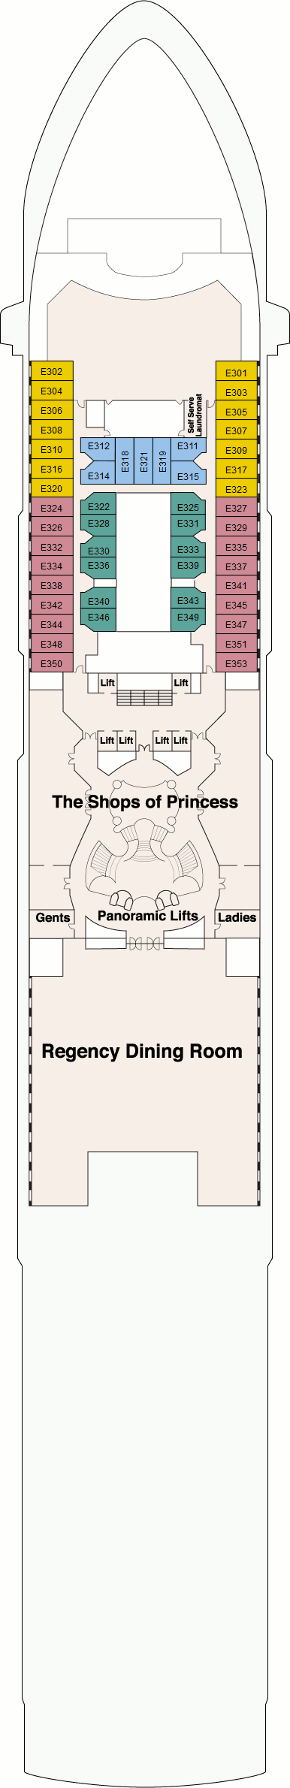 Sun Princess Emerald Deck Deck Plan